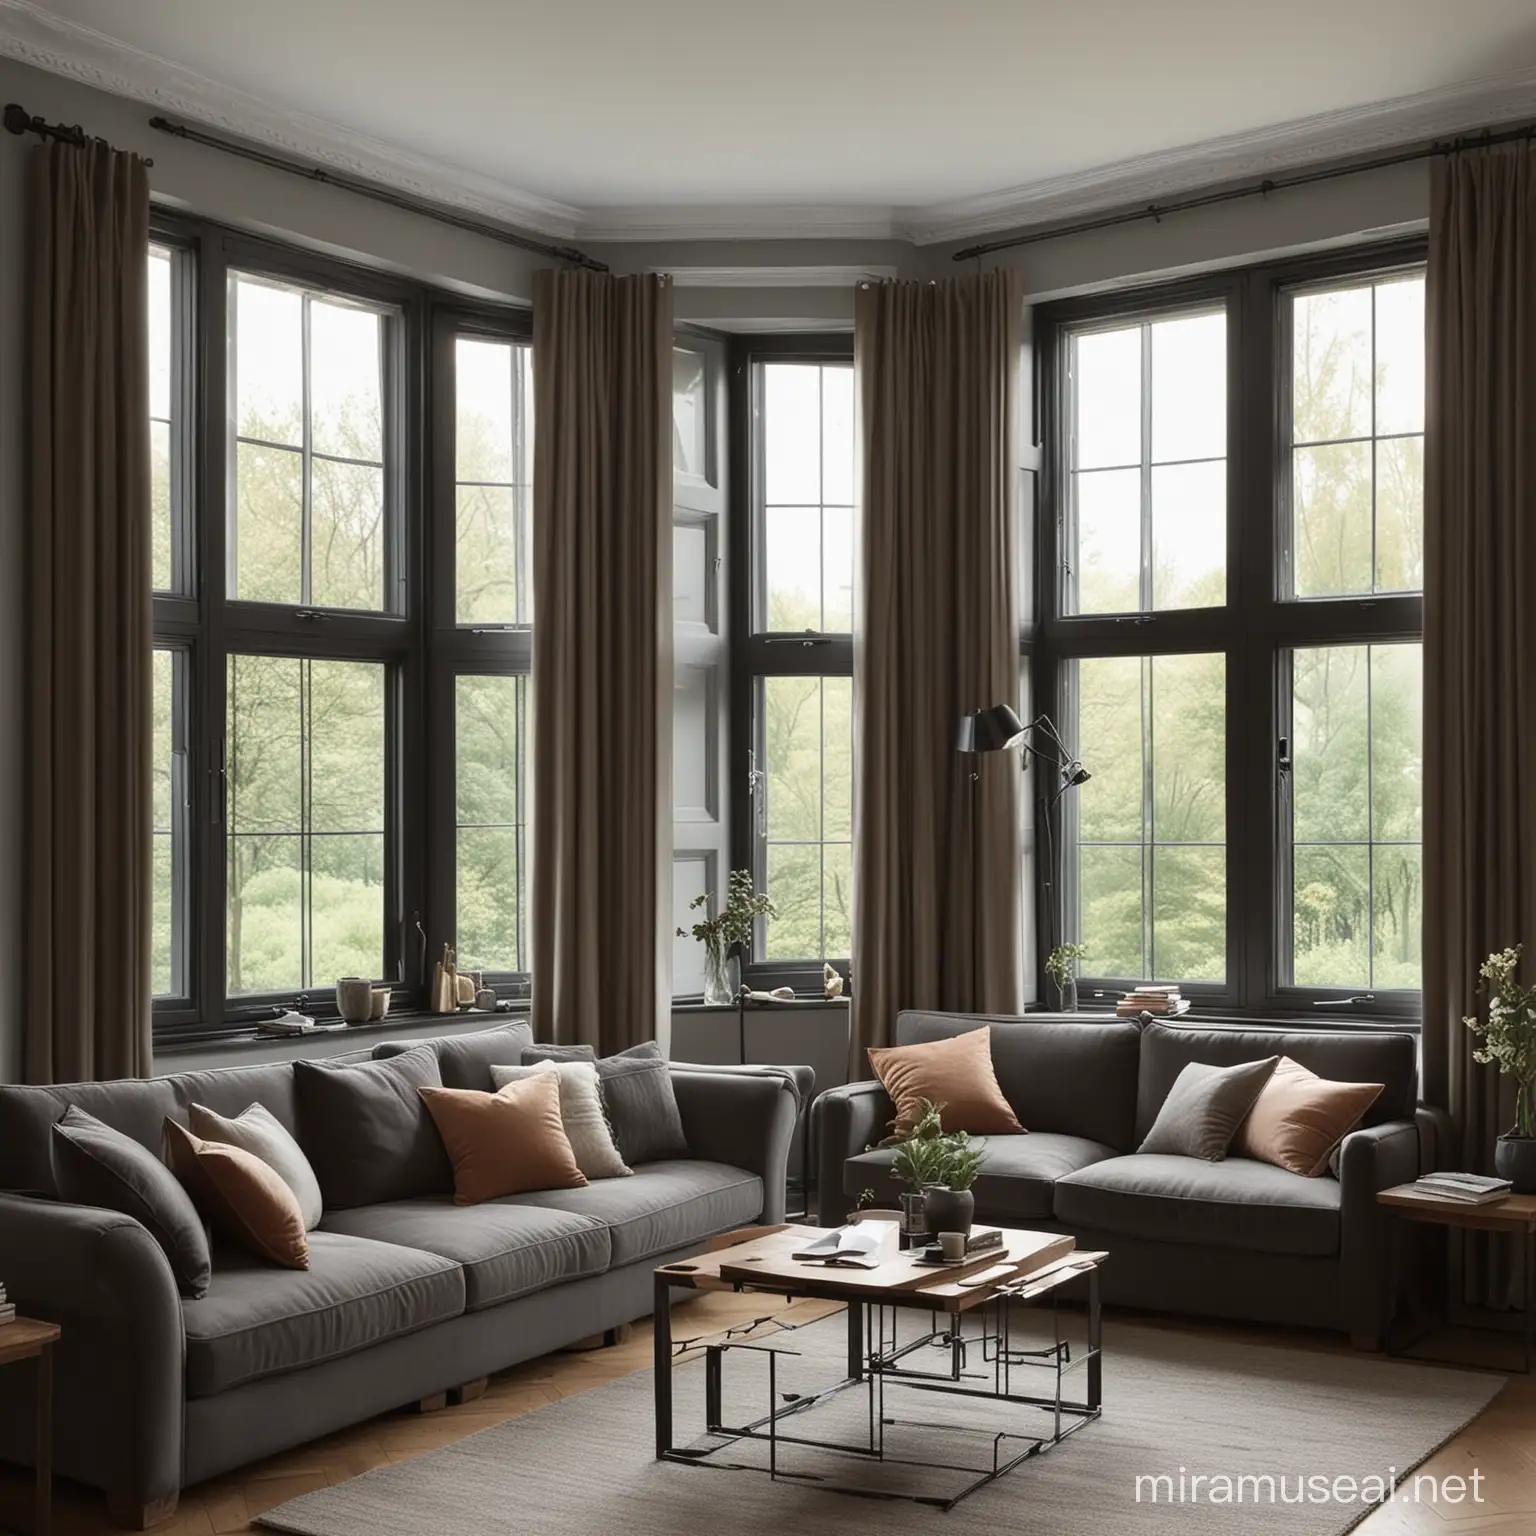 Cozy Living Room with Small Dark Handled Windows